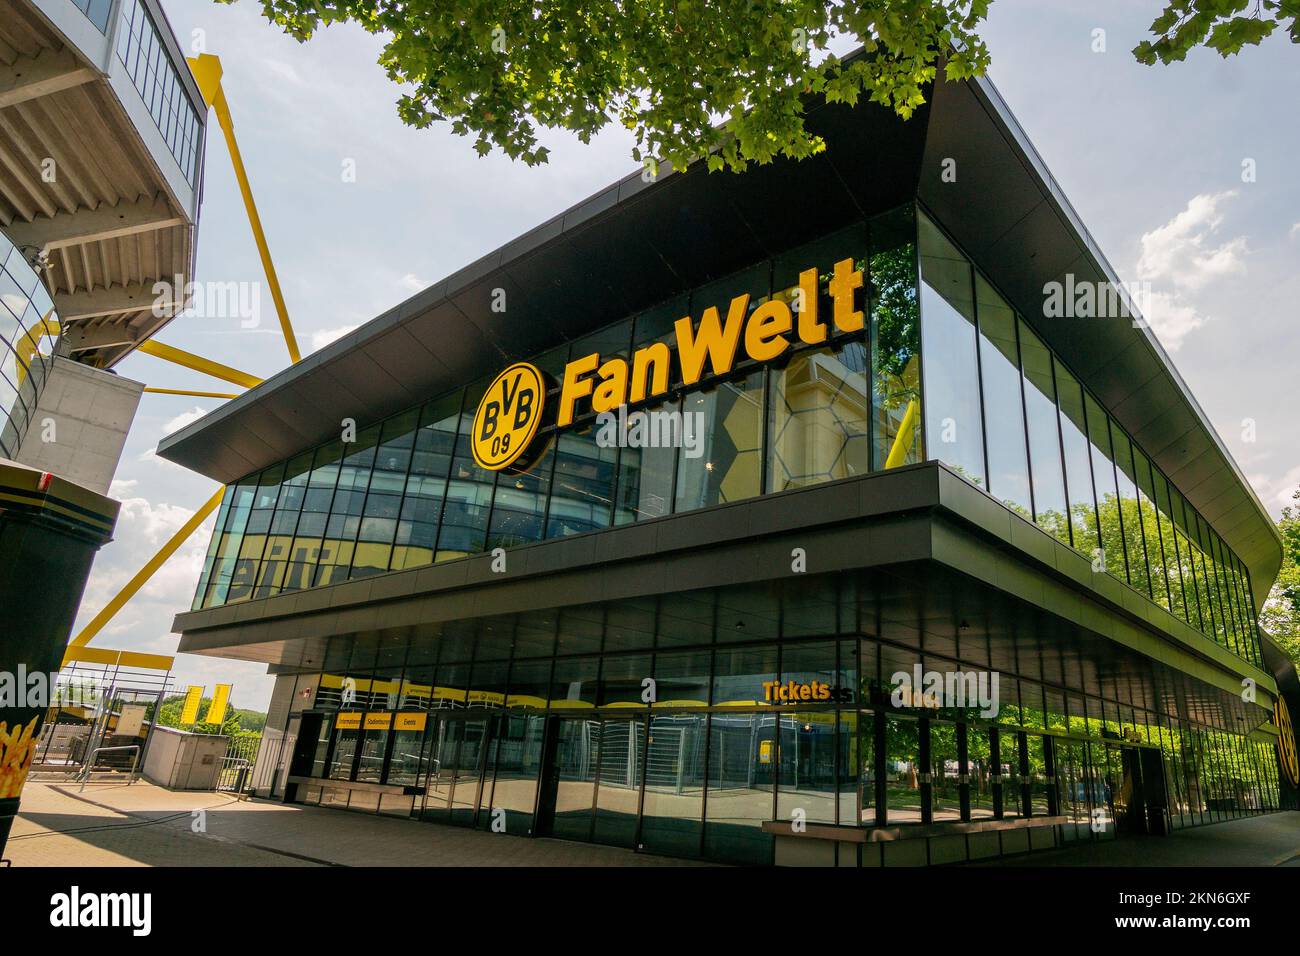 Borussia Dortmund Fanshop Fanwelt Stockfoto